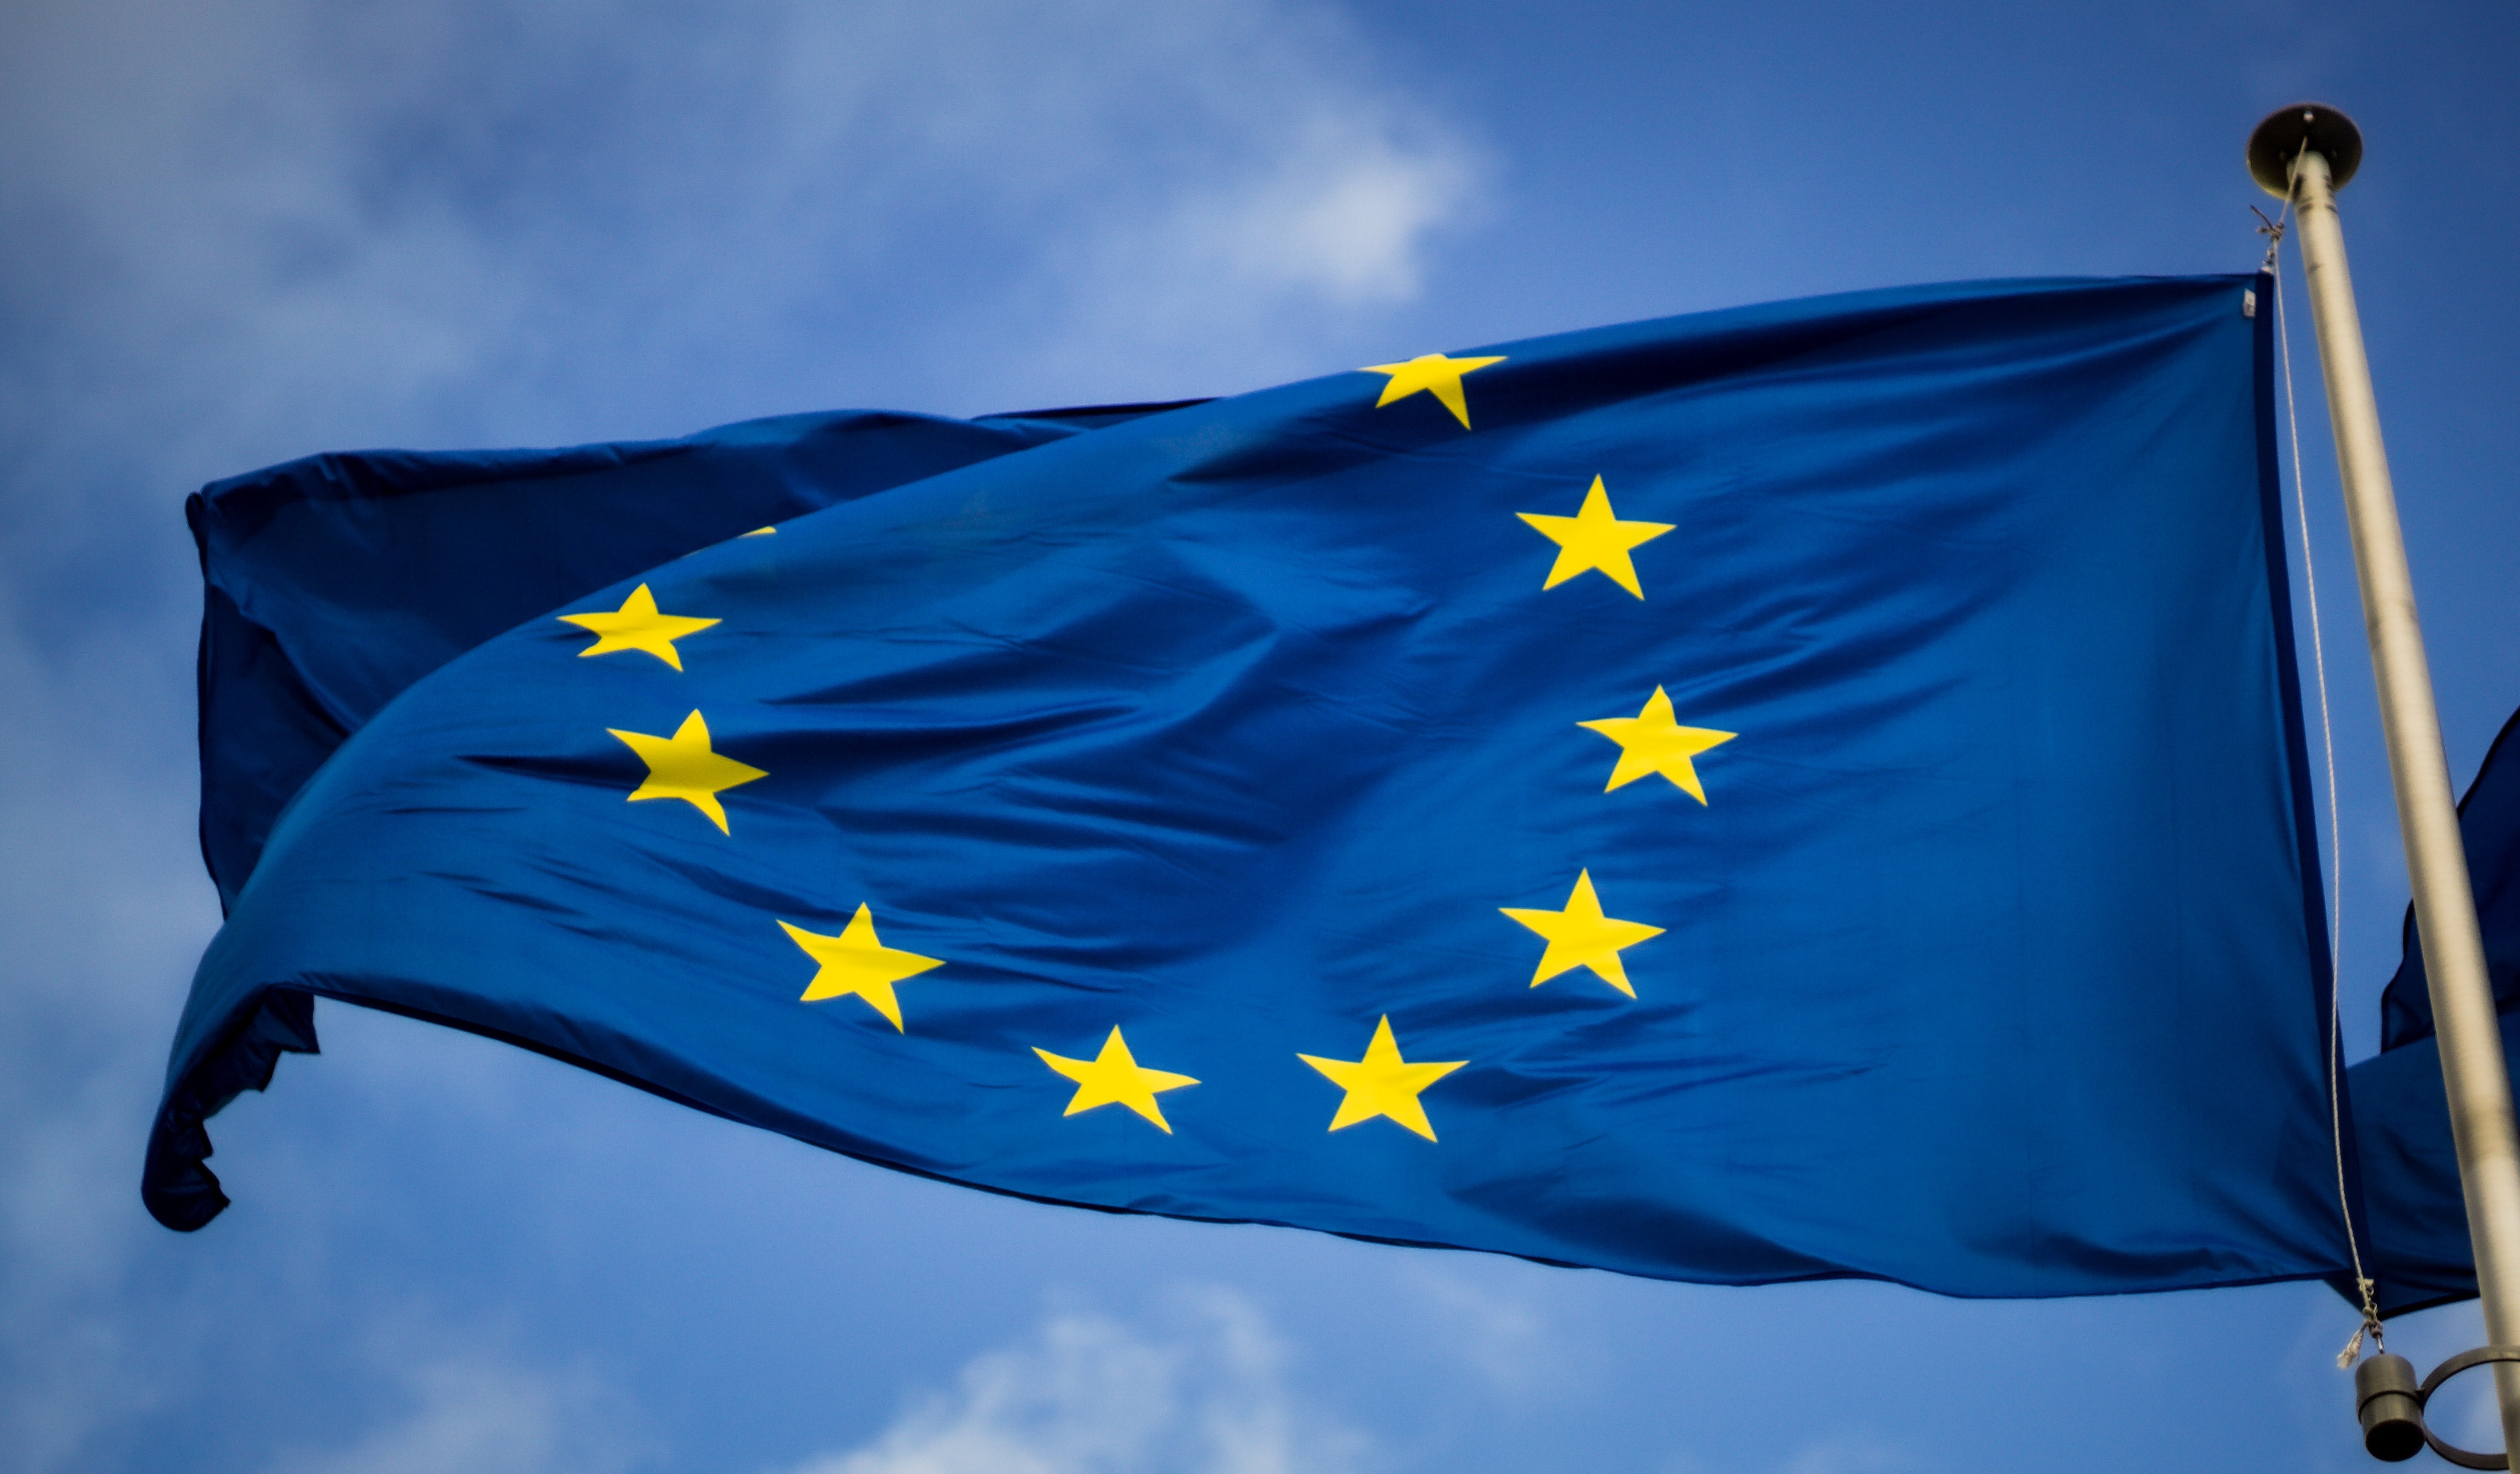 element dekoracyjny - flaga UE